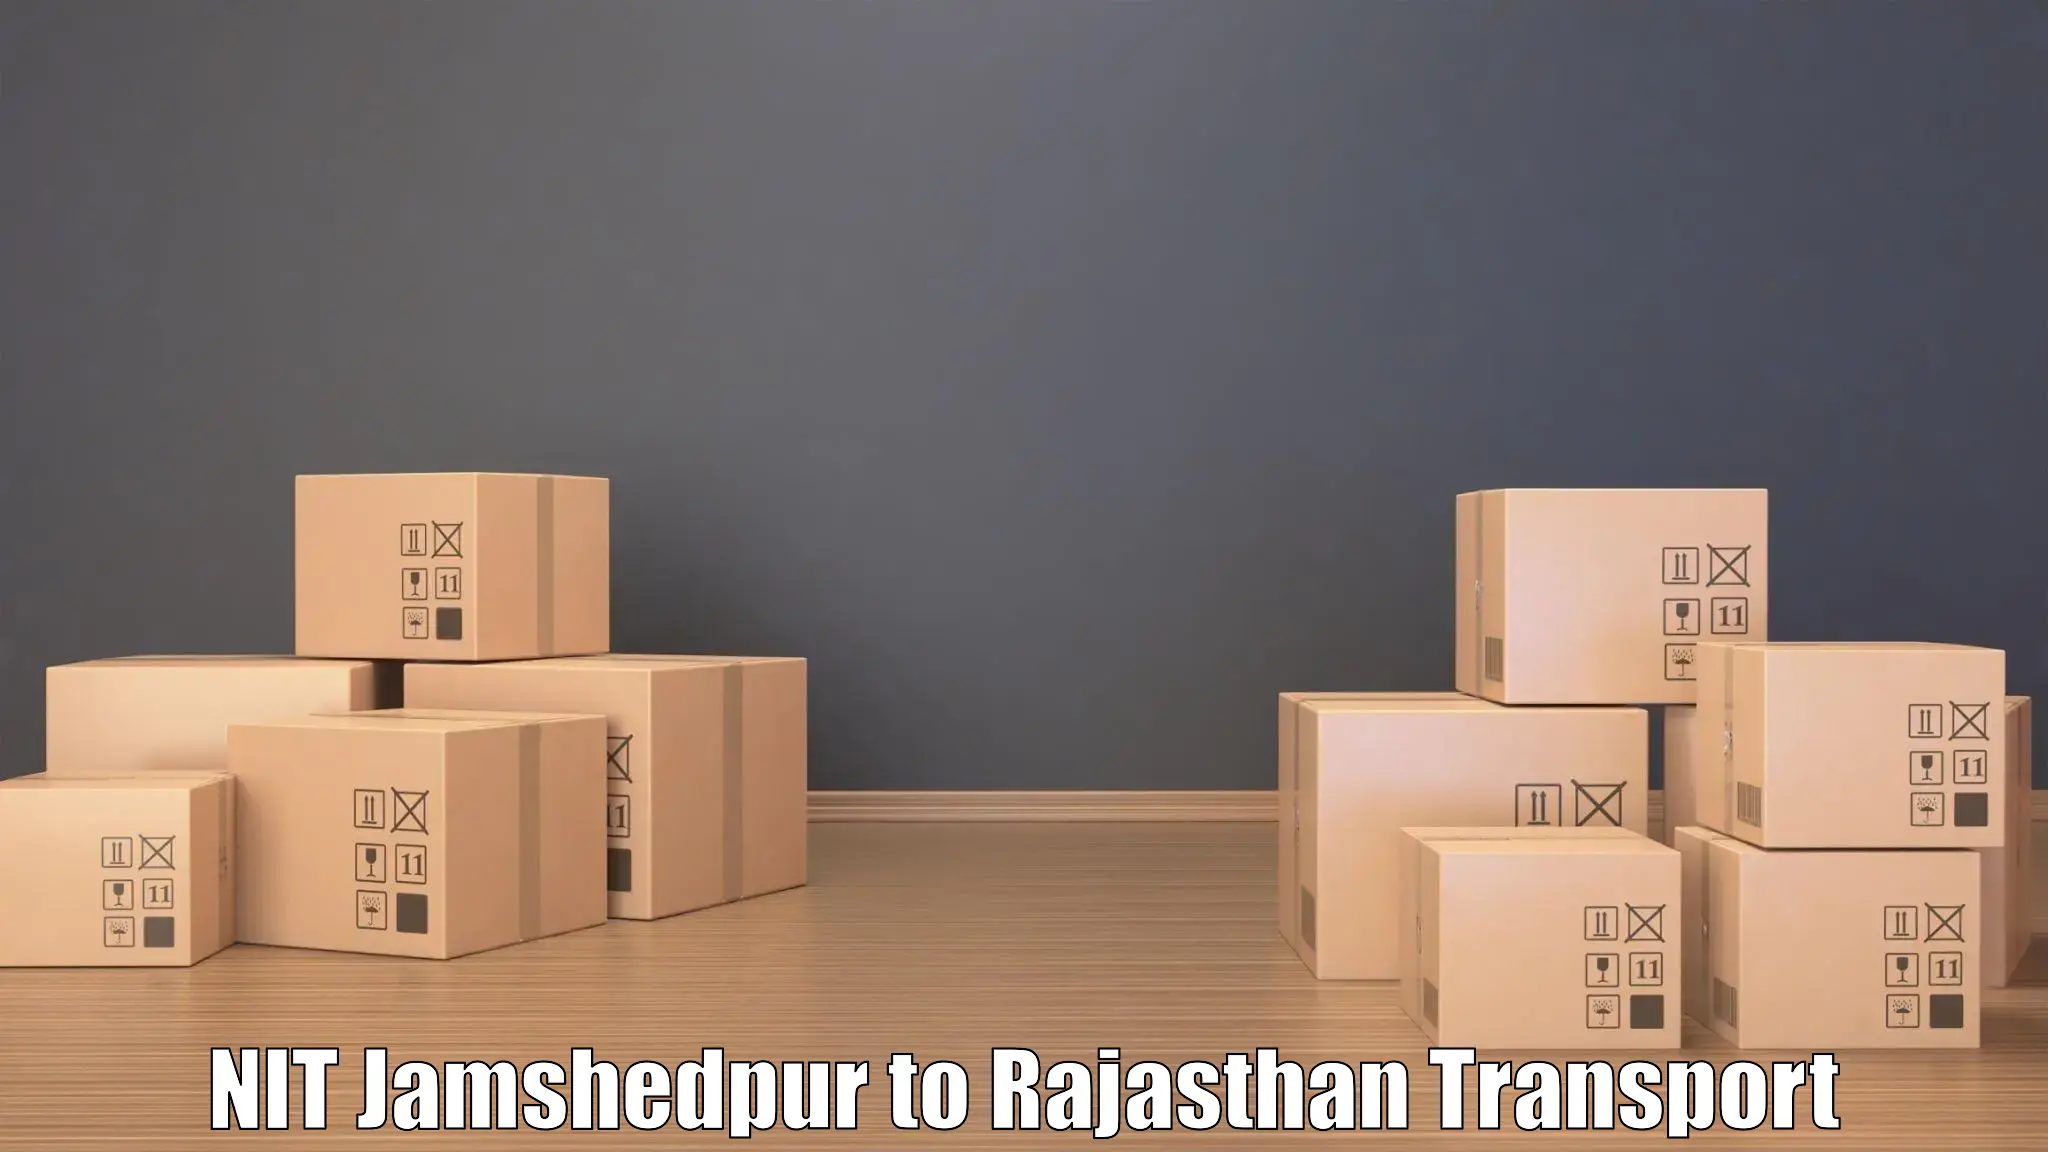 Nearby transport service NIT Jamshedpur to Bhiwadi